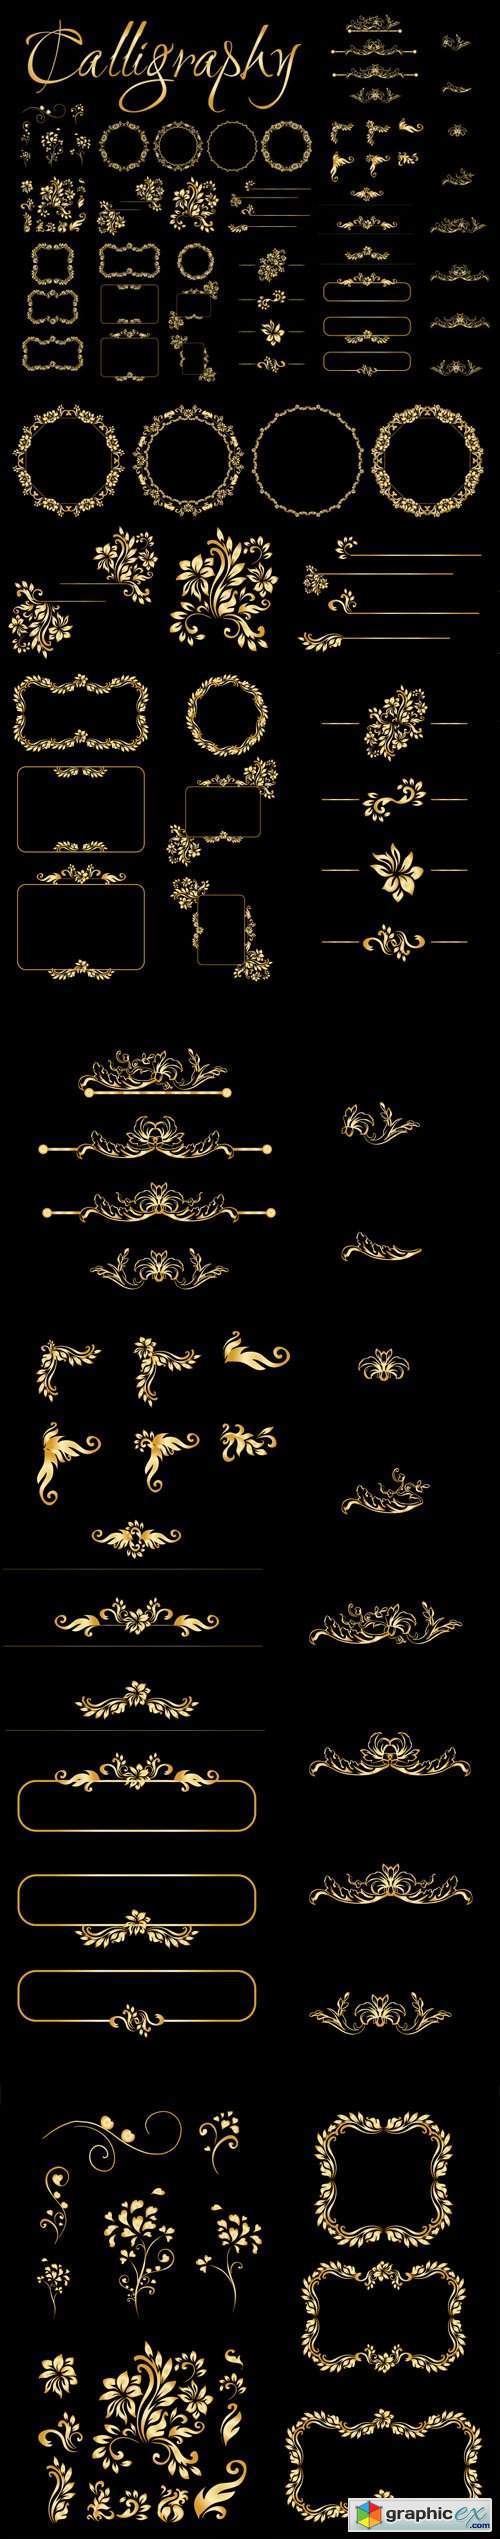 Golden Calligraphy Elements Vector Design Templates